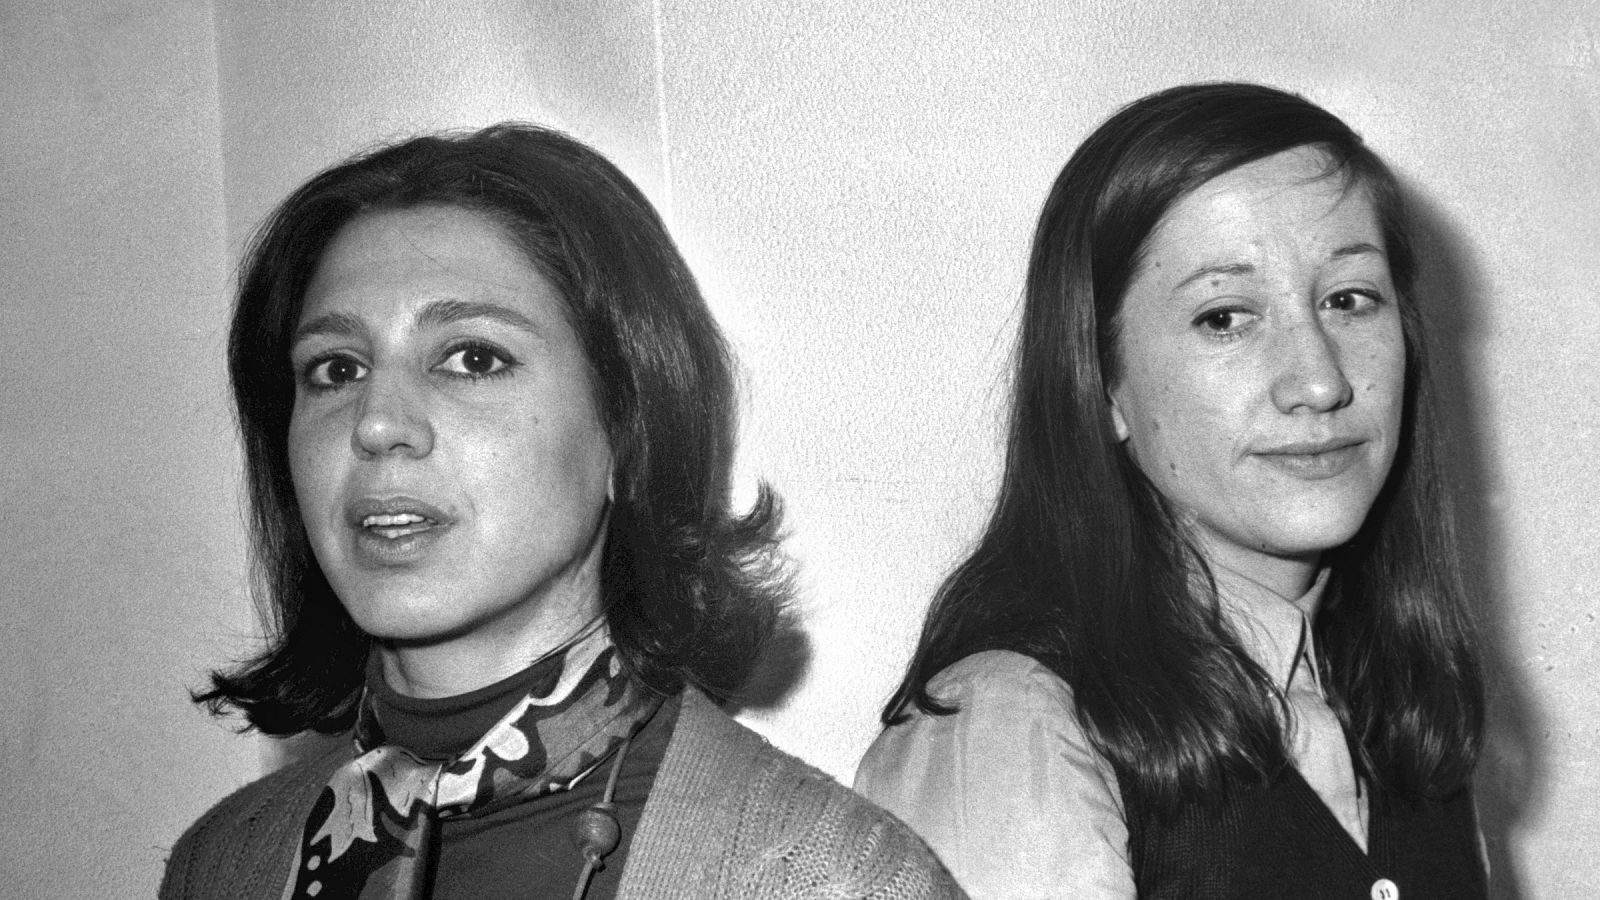 Carmen Santonja y Gloria Van Aerssen (izquierda), del dúo musical Vainica Doble en una imagen de 1970.